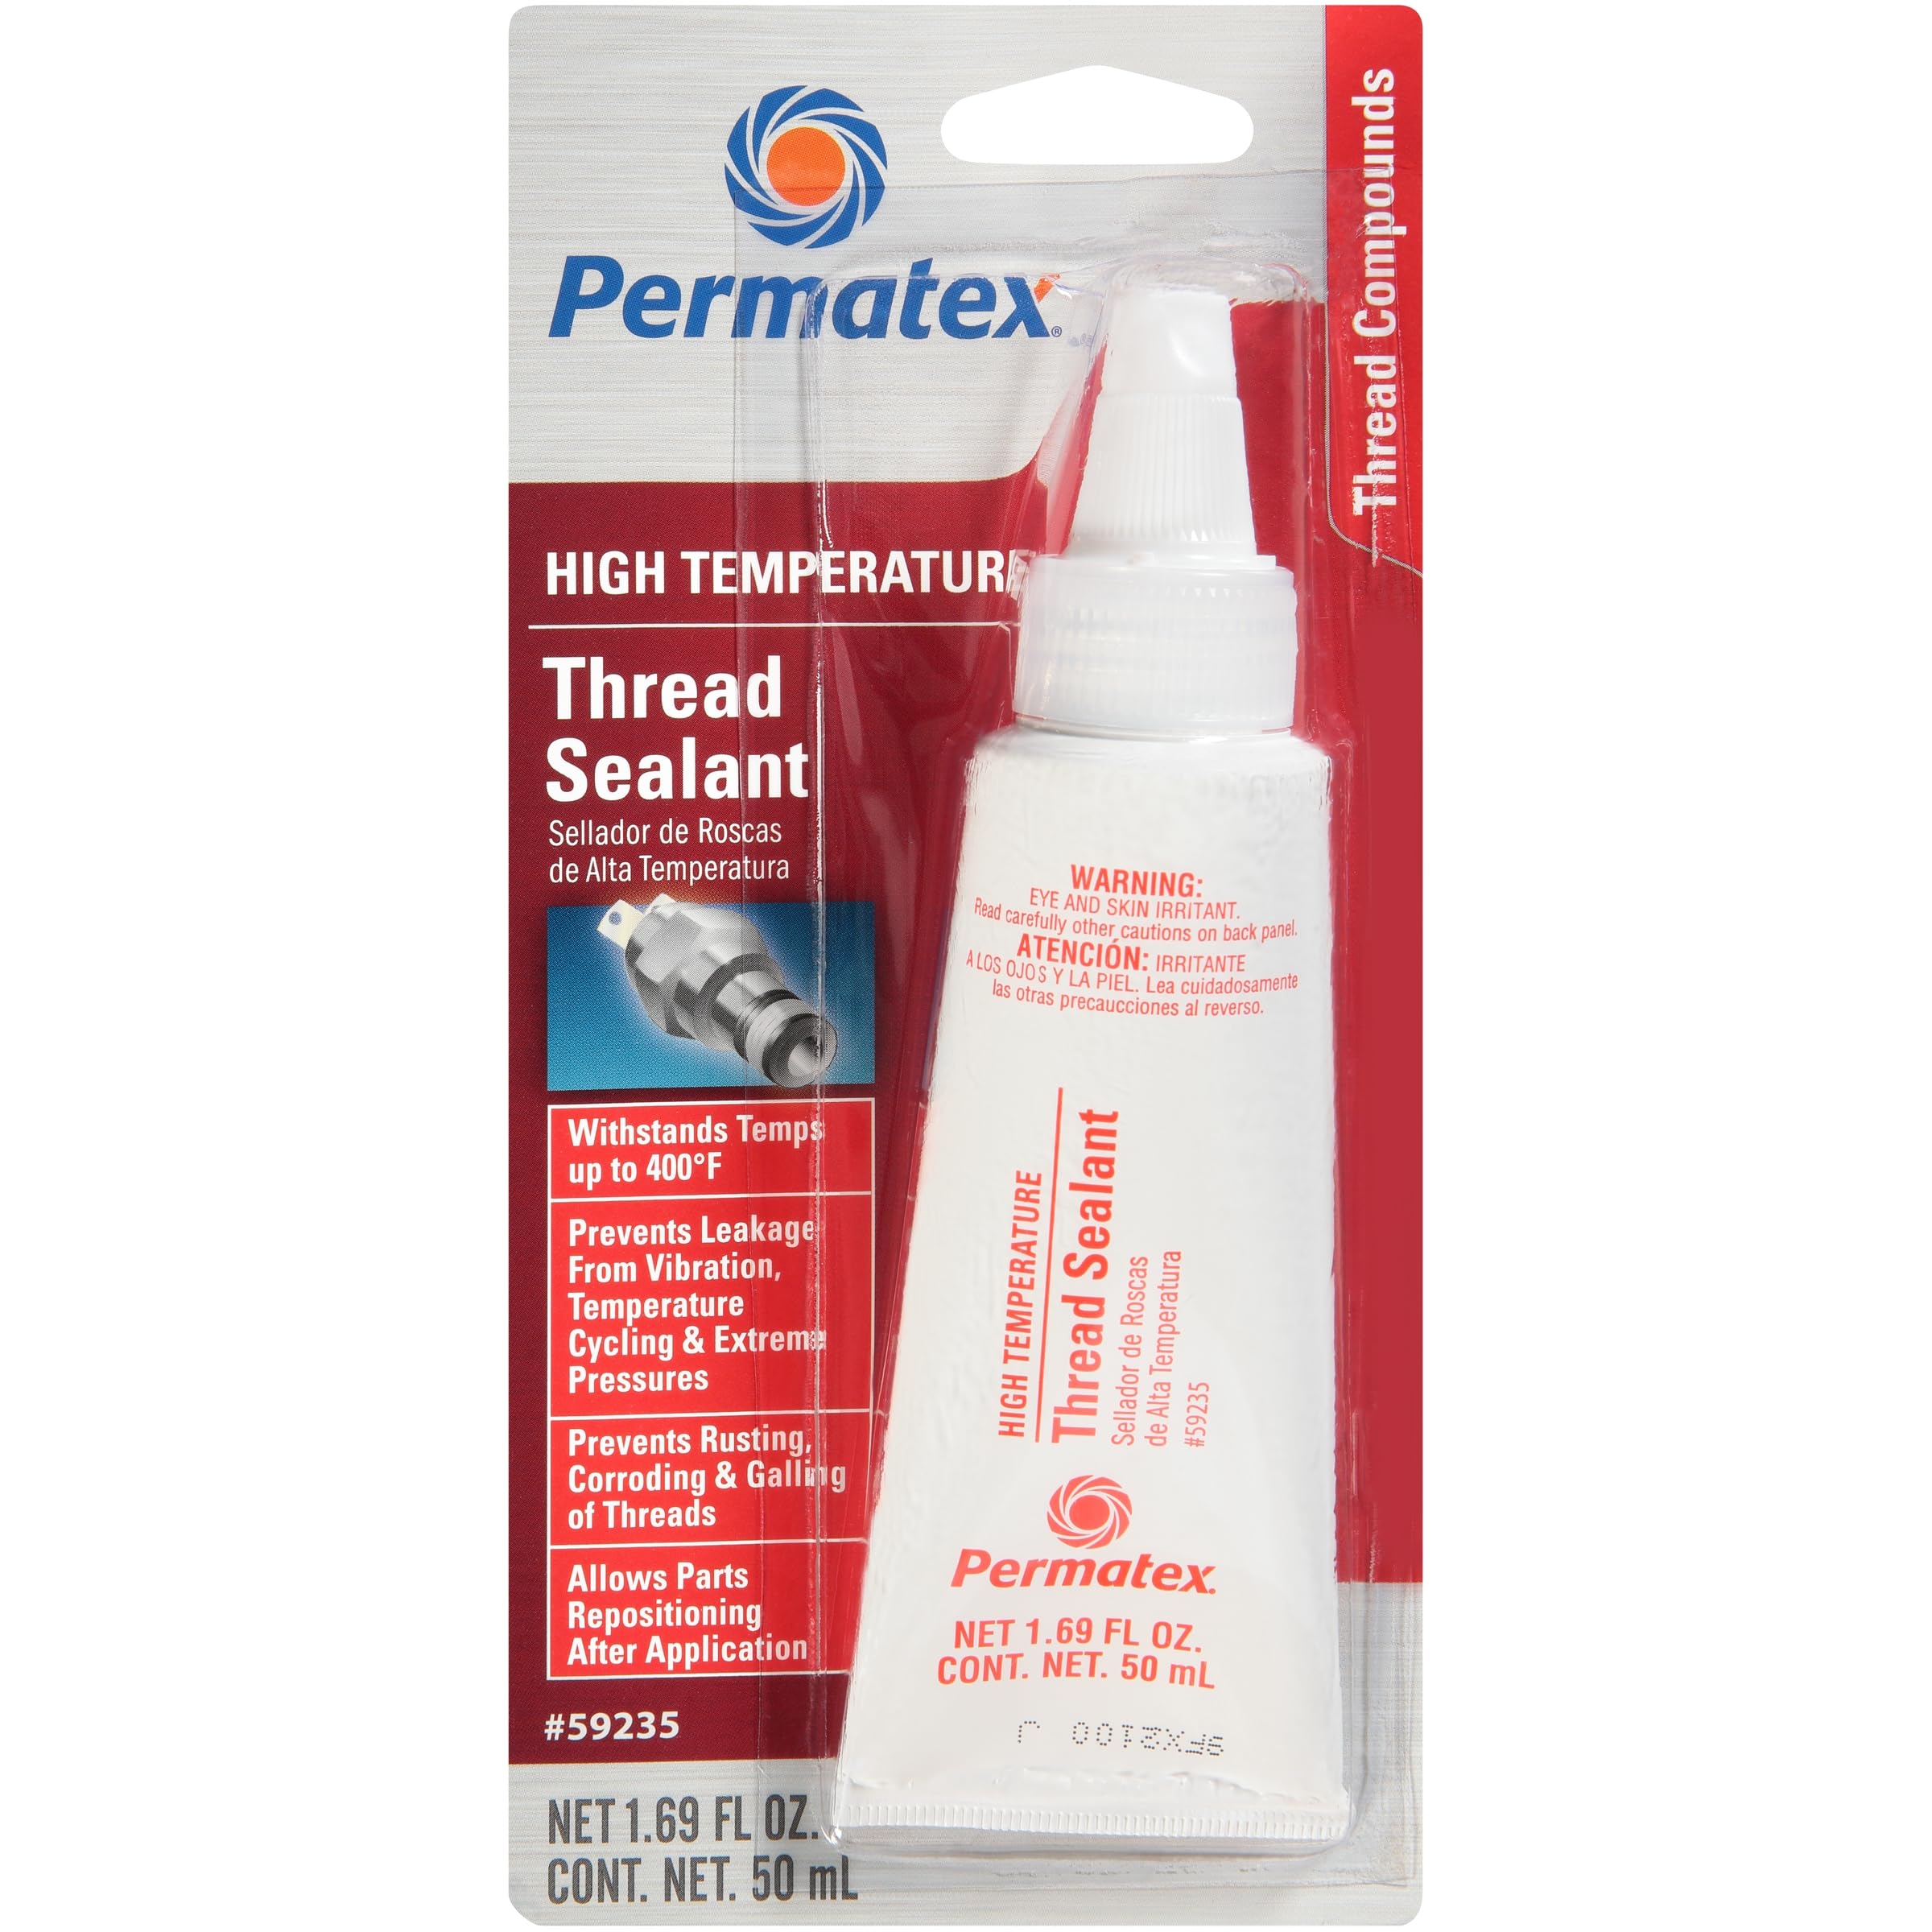 Permatex 59235 High Temperature Thread Sealant, 50 ml. $10.50 $10.48